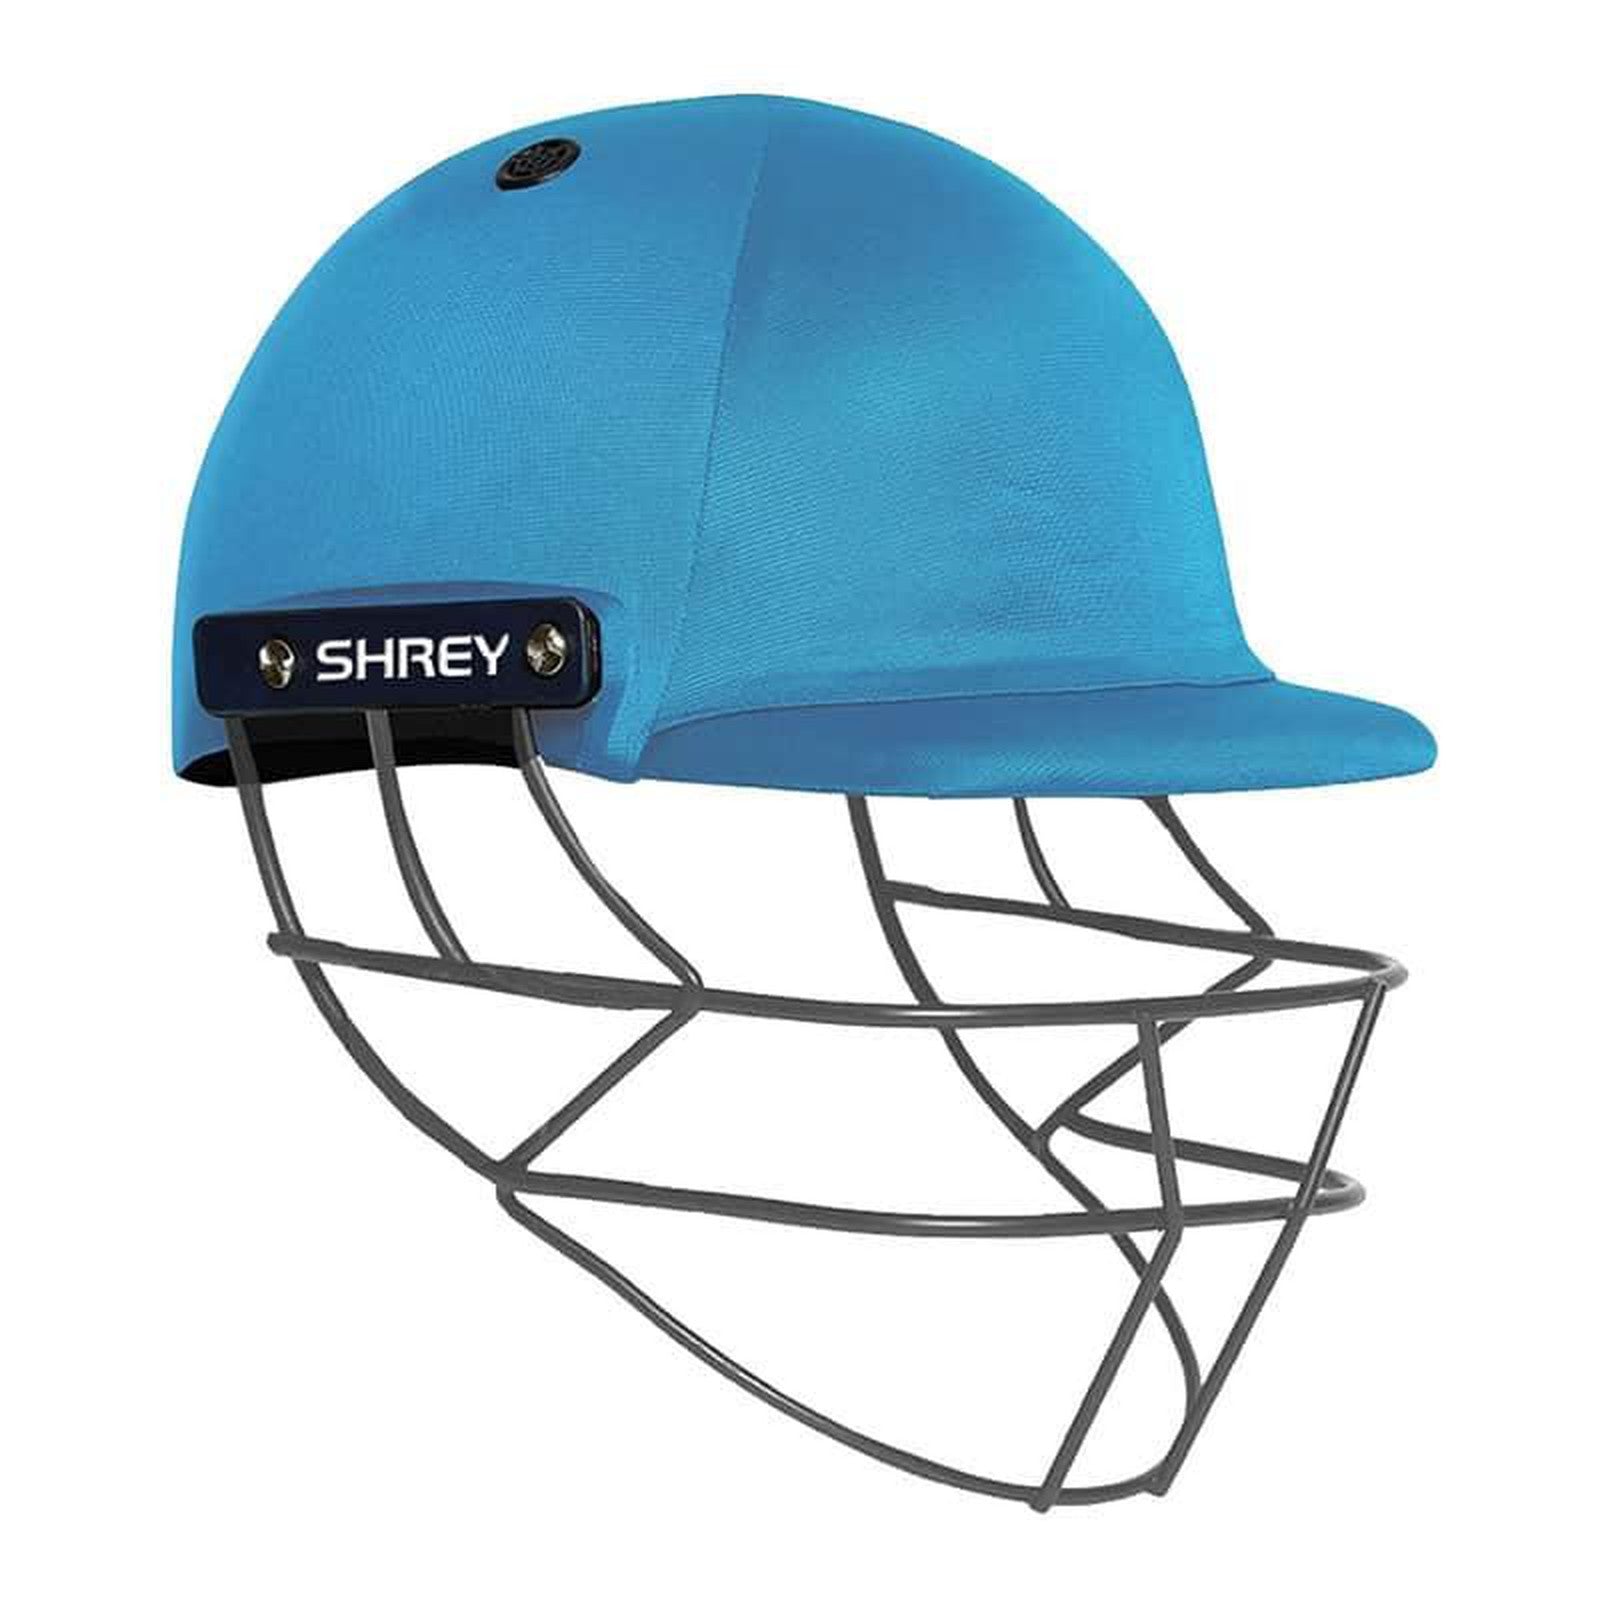 Shrey Performance 2.0 Cricket Helmet With Mild Steel - Sky Blue Junior